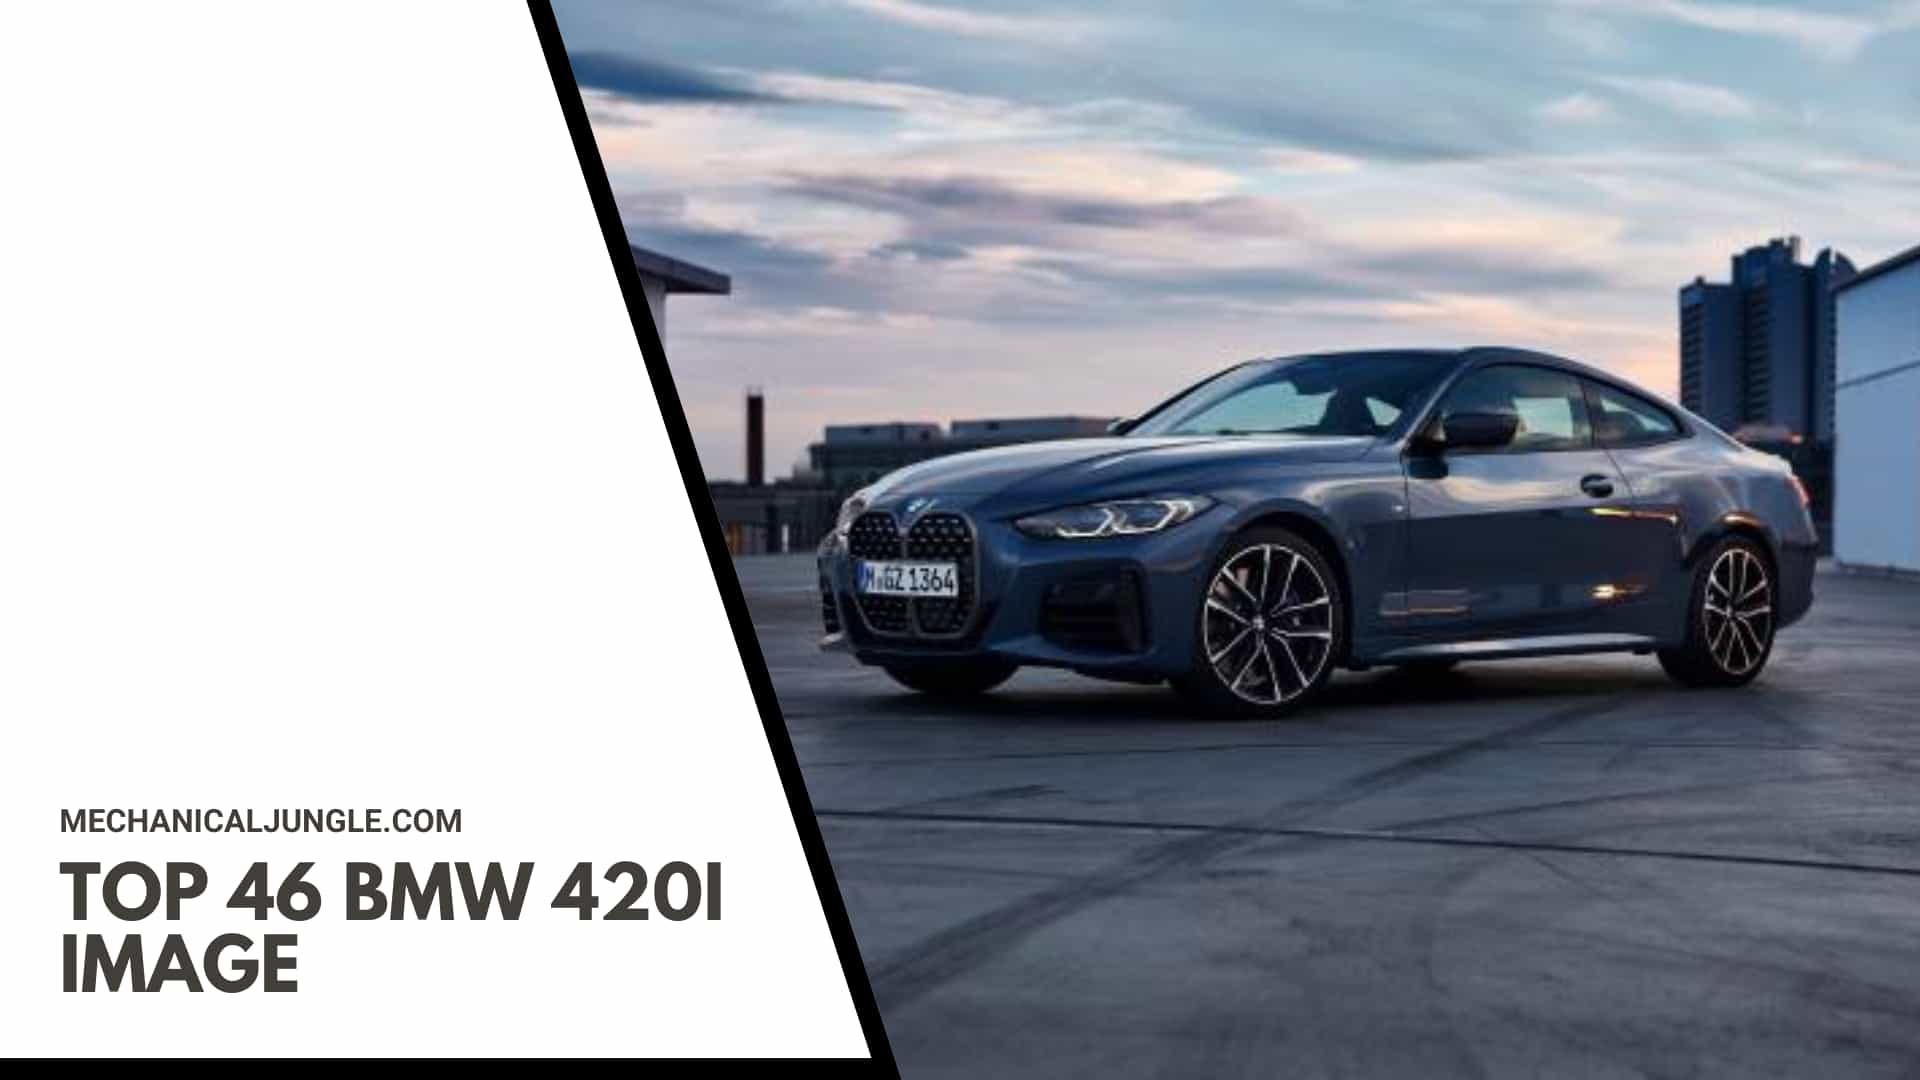 Top 46 BMW 420i Image